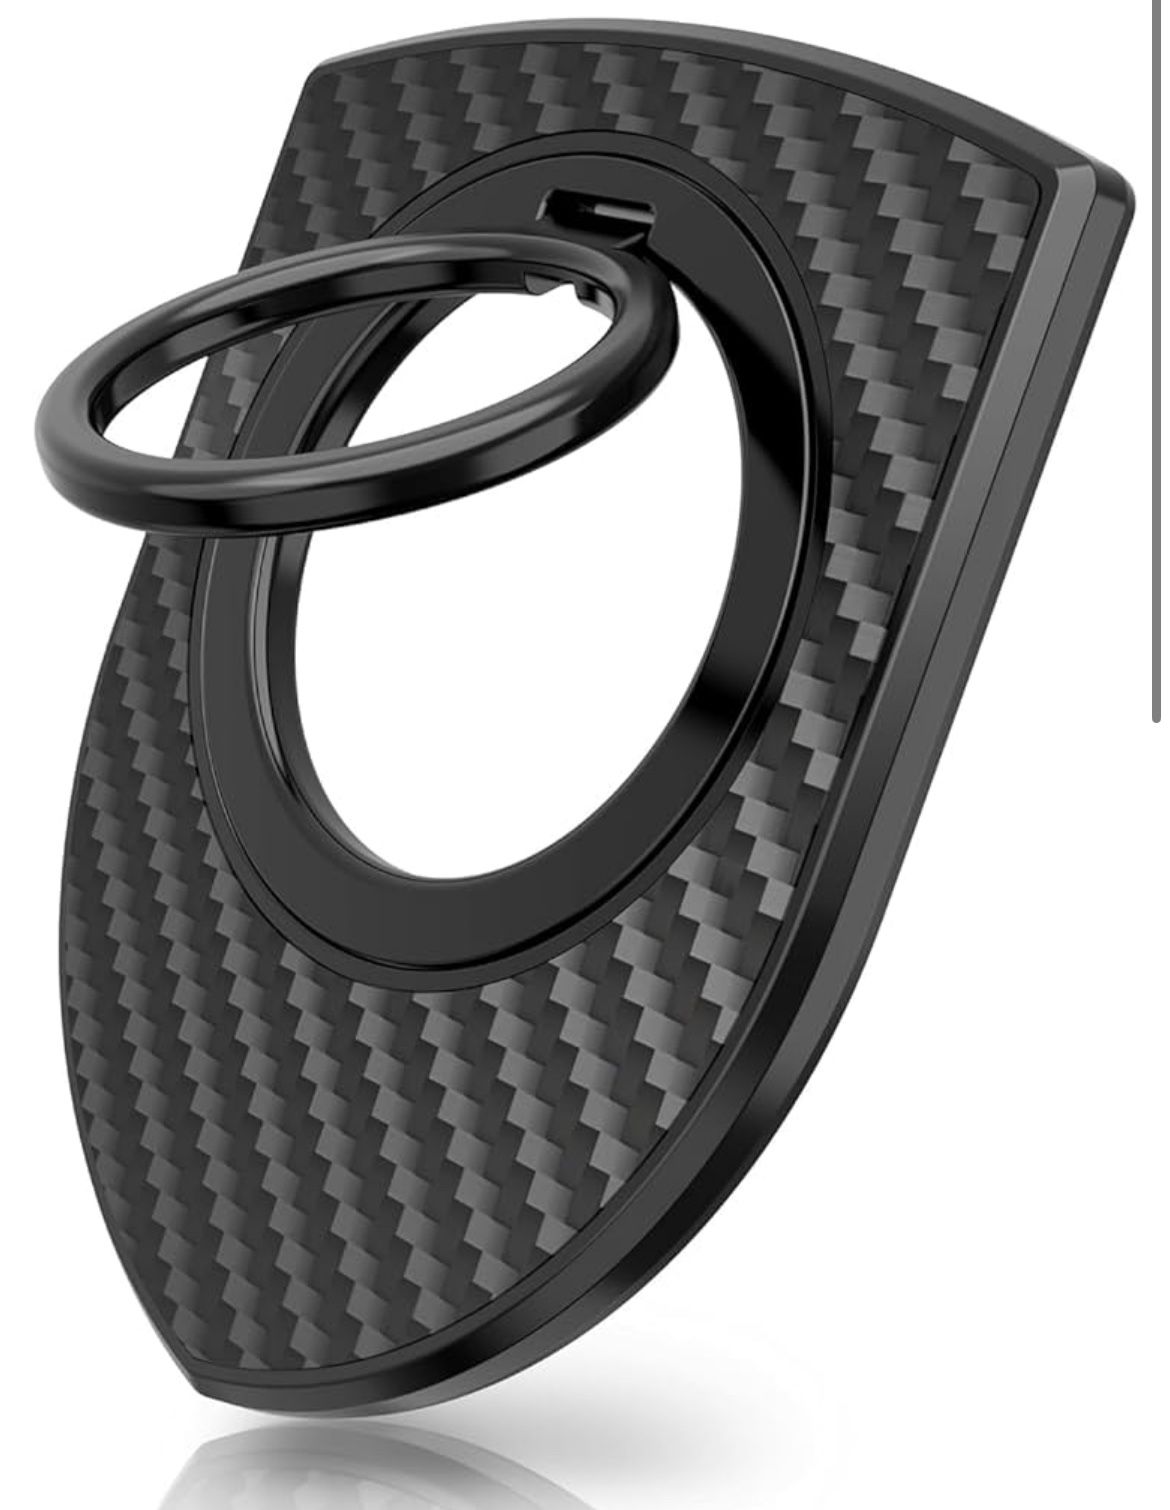 Magnet phone grip carbon fiber pattern 